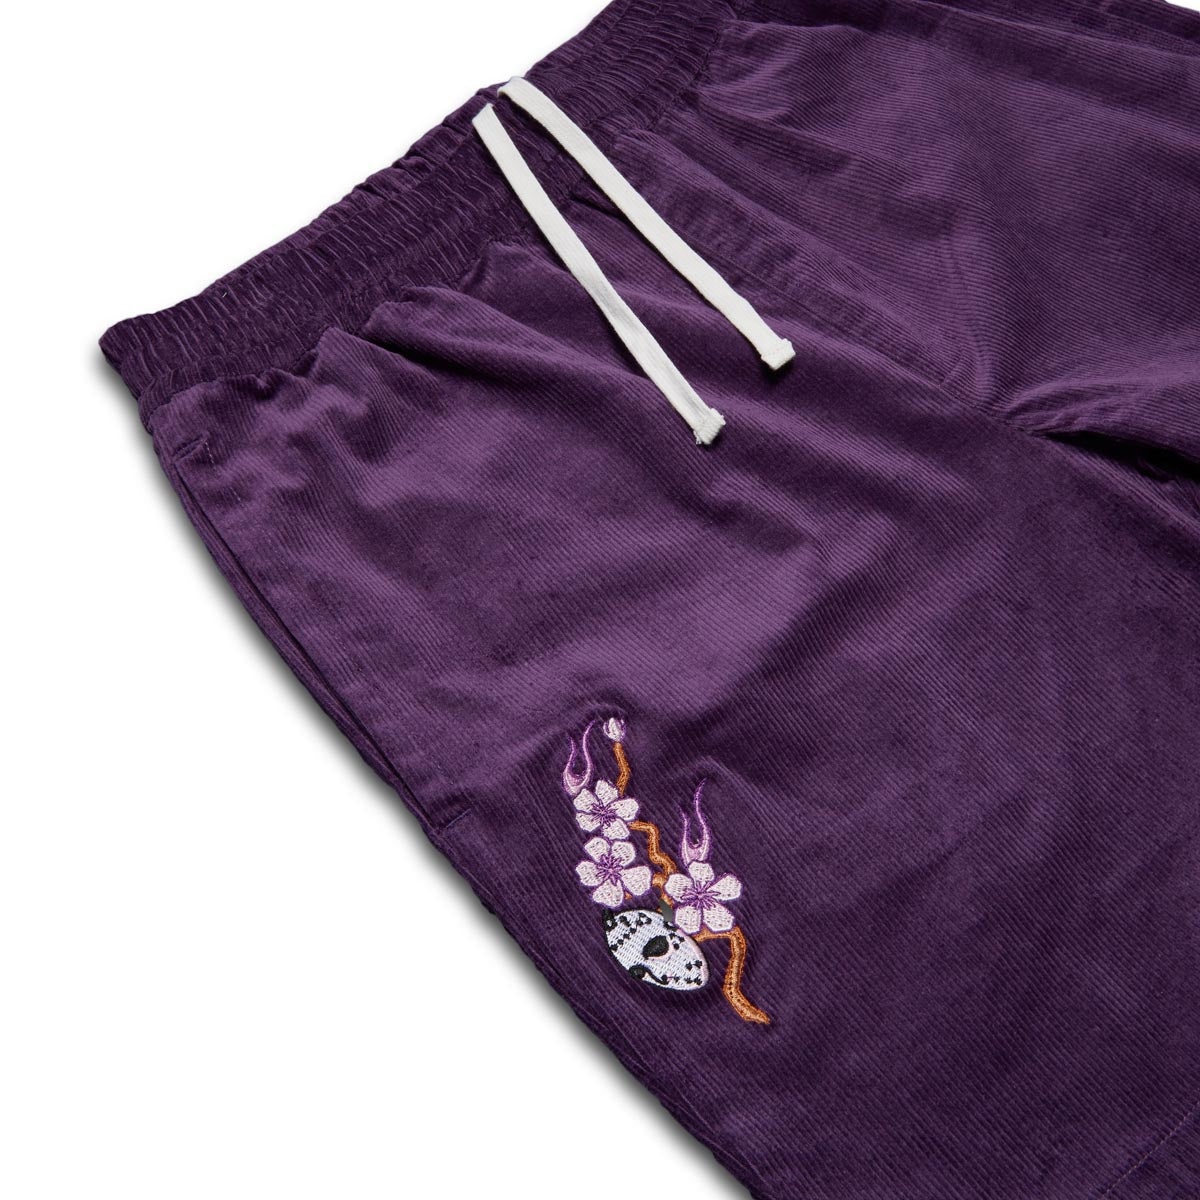 DGK Fire Blossom Shorts - Purple image 3